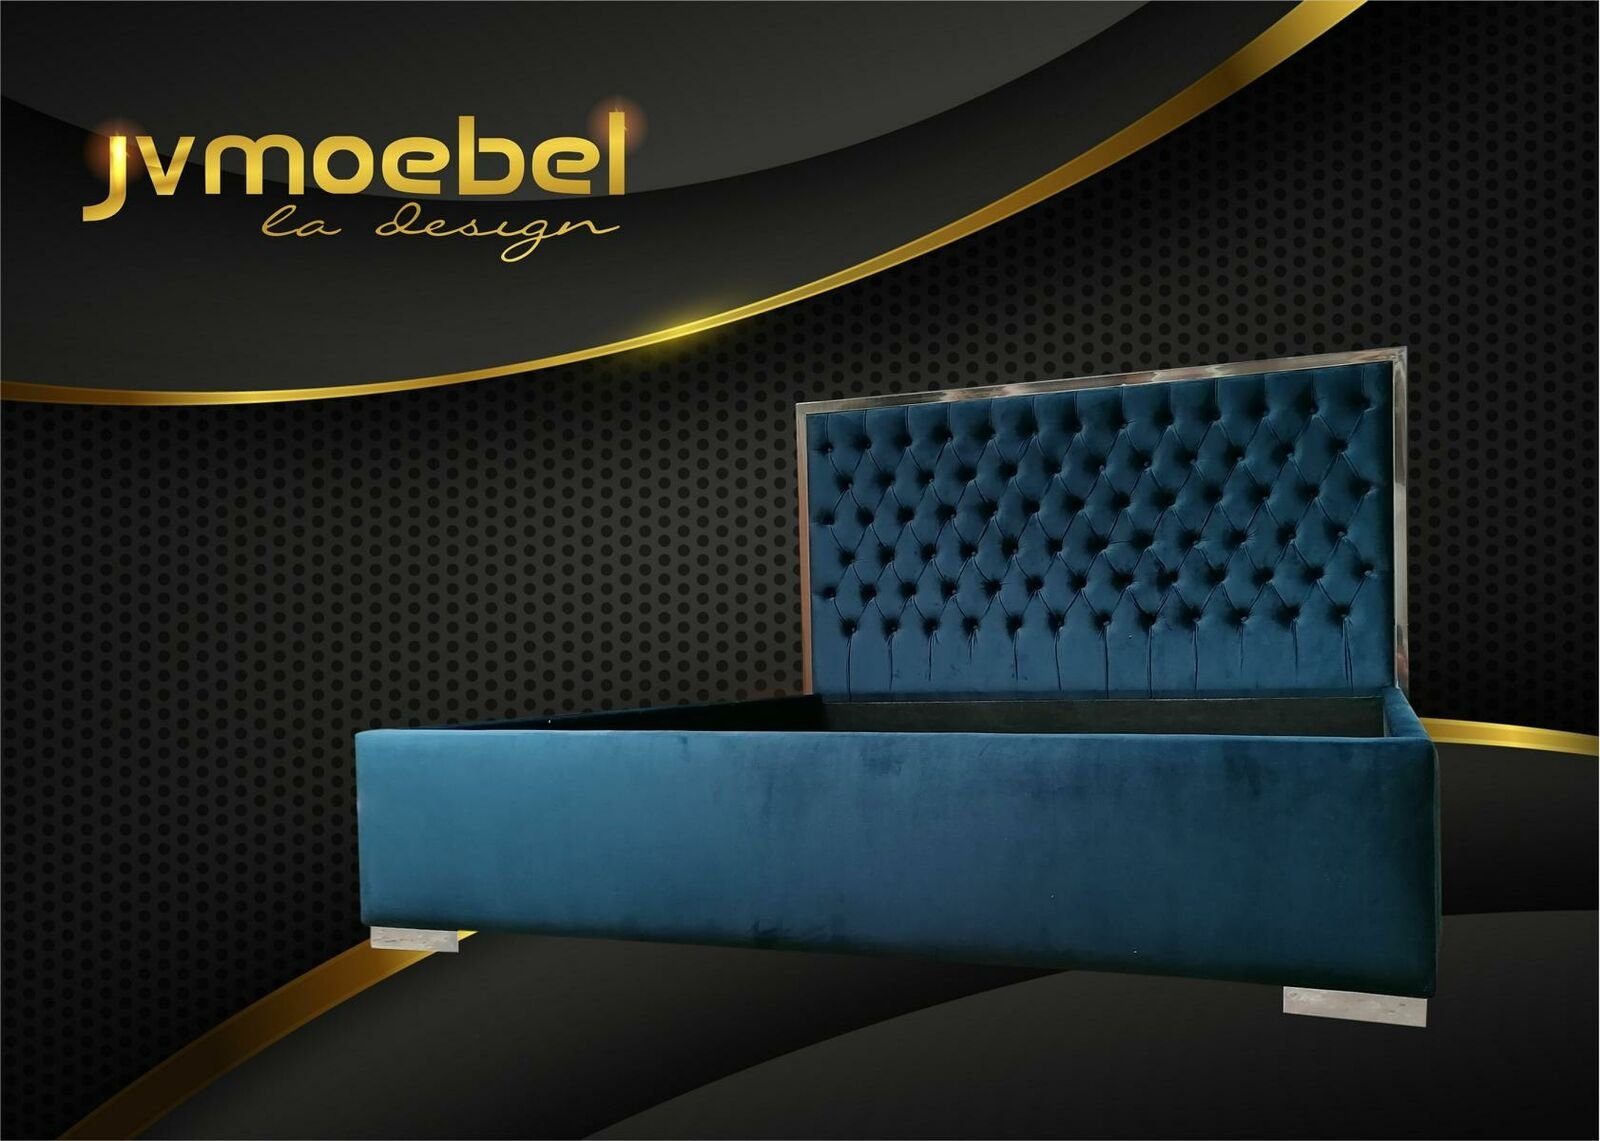 JVmoebel Bett, Bett Polster Design Luxus Doppel Betten Blau180x200cm